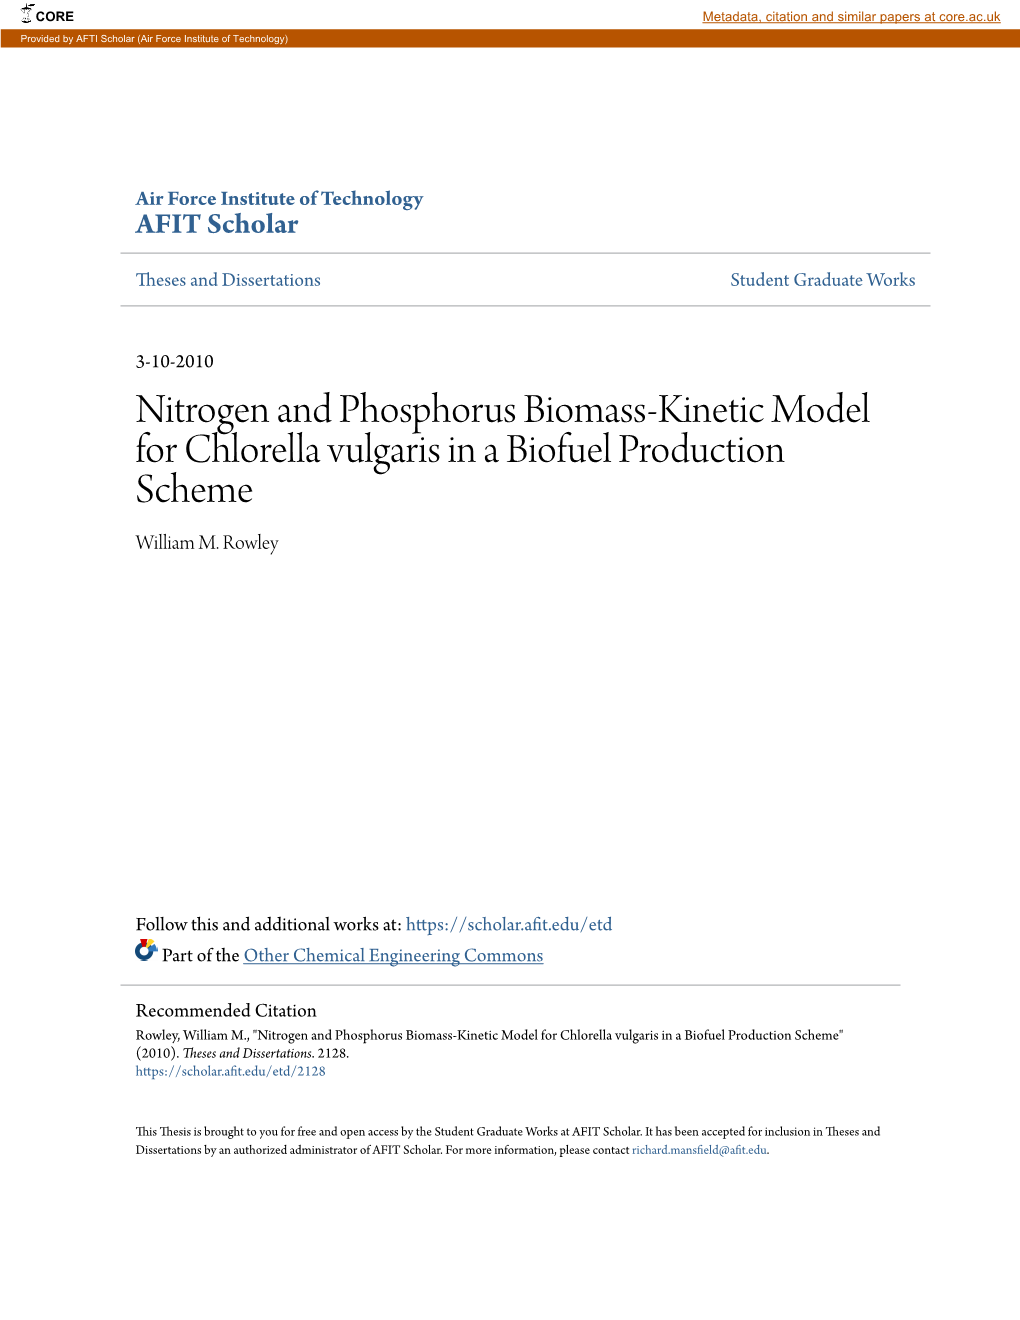 Nitrogen and Phosphorus Biomass-Kinetic Model for Chlorella Vulgaris in a Biofuel Production Scheme William M